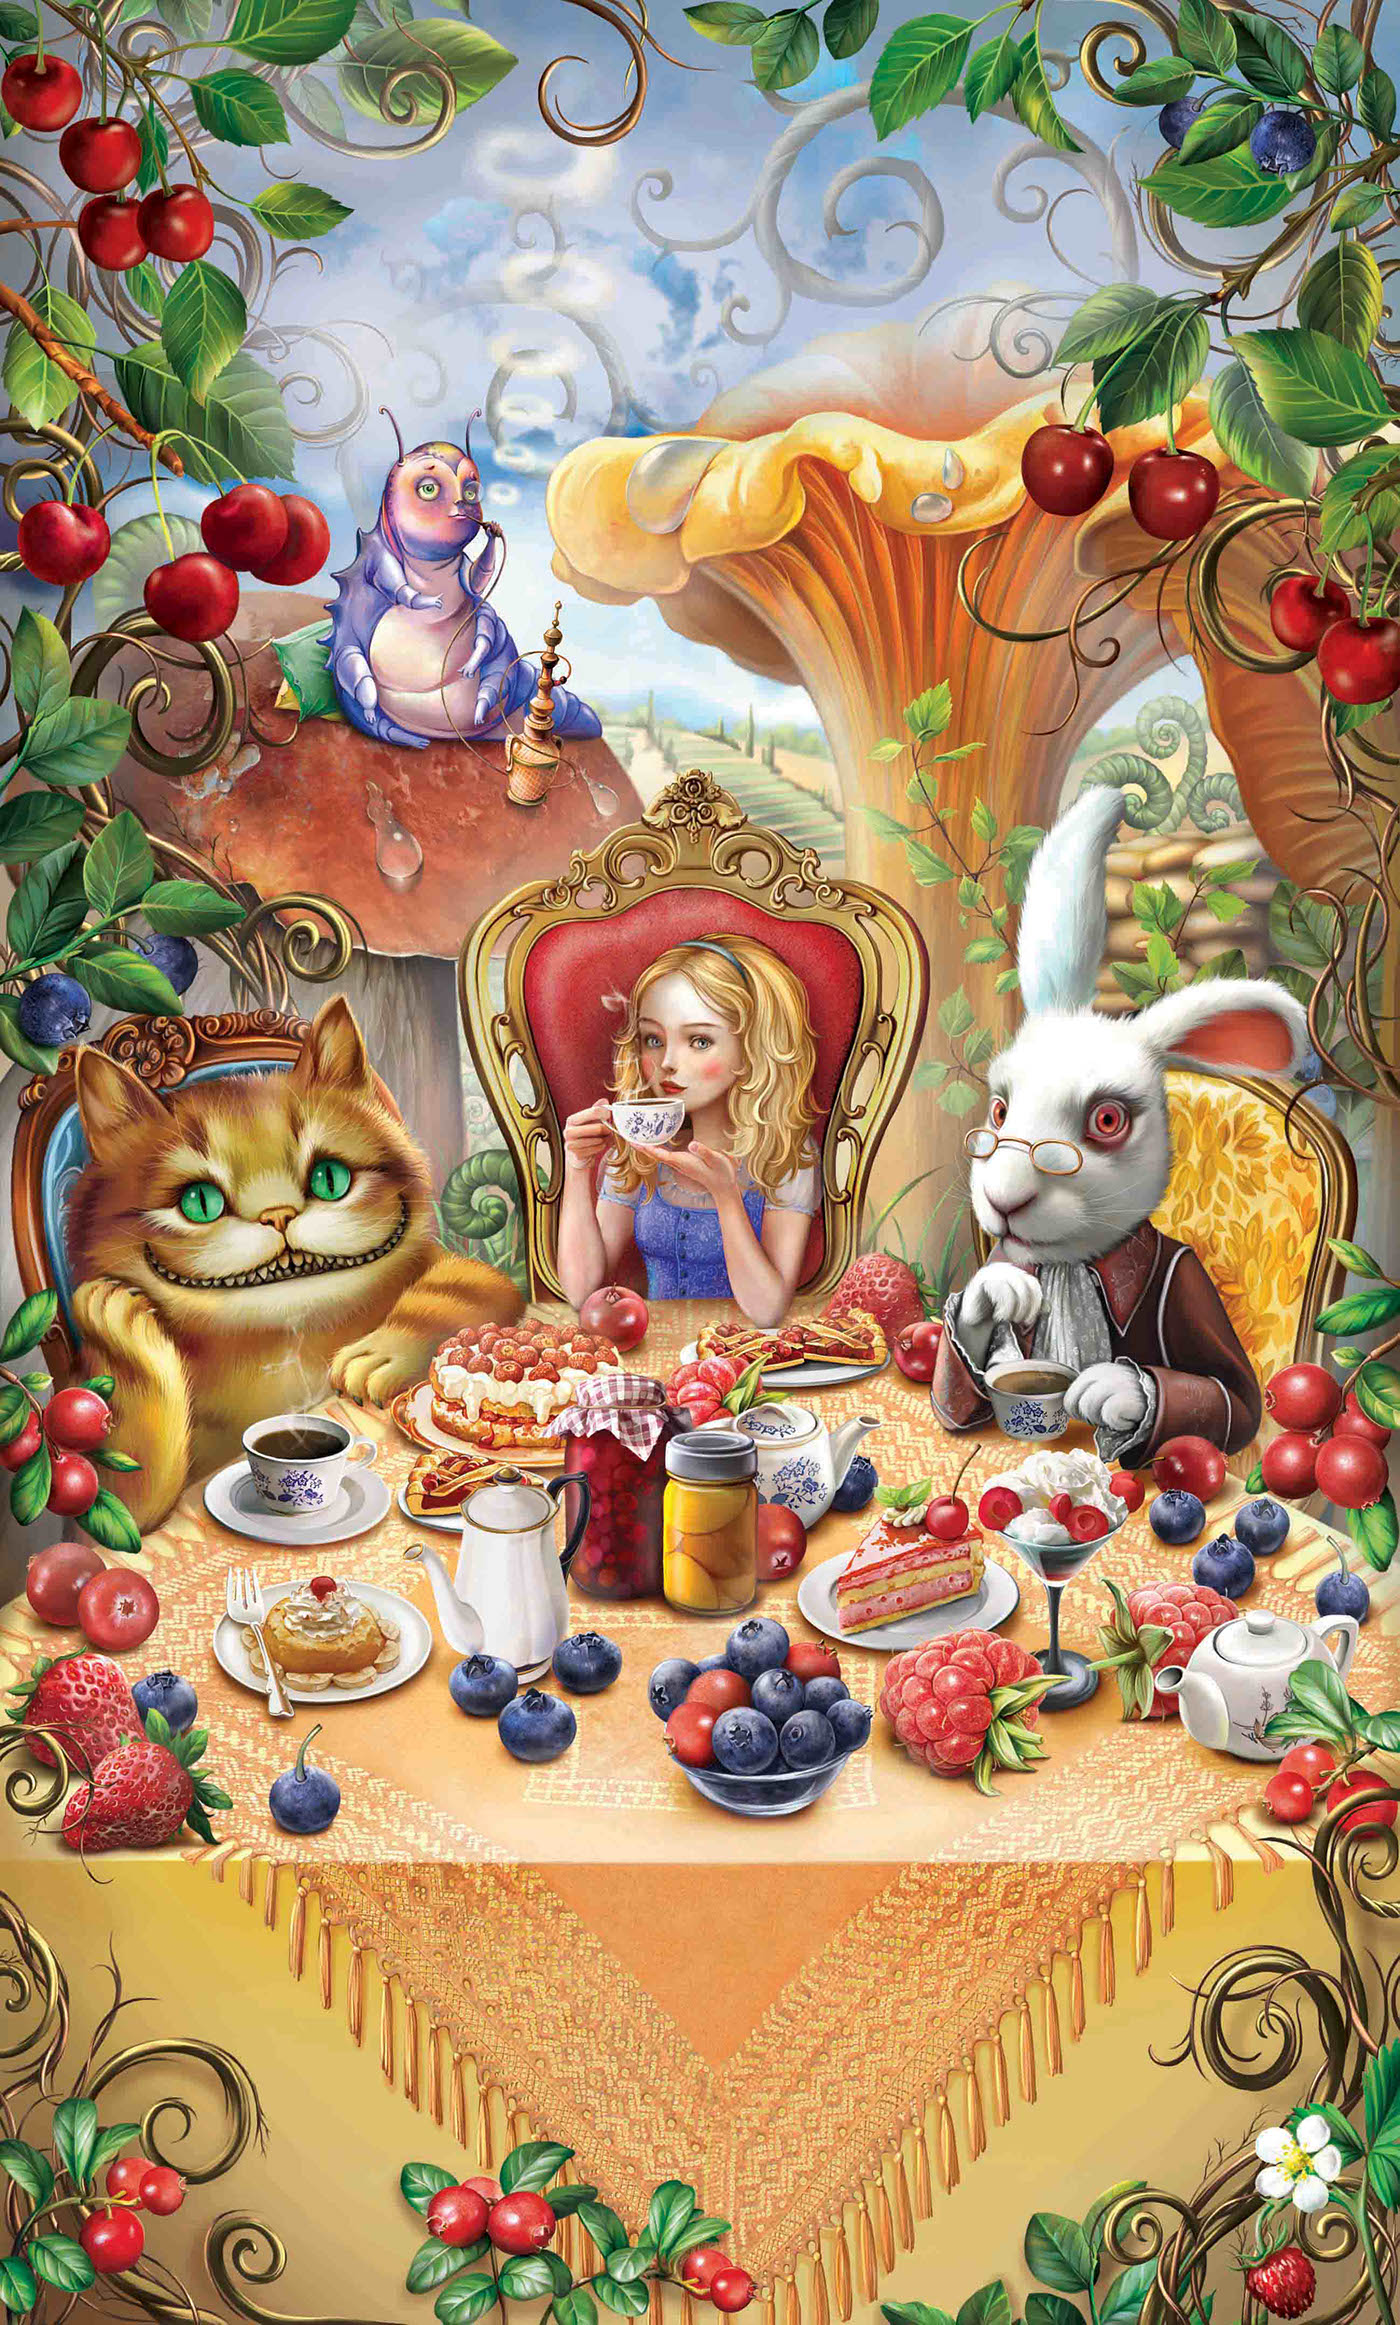 Wonderful Illustrations of Alice in Wonderland